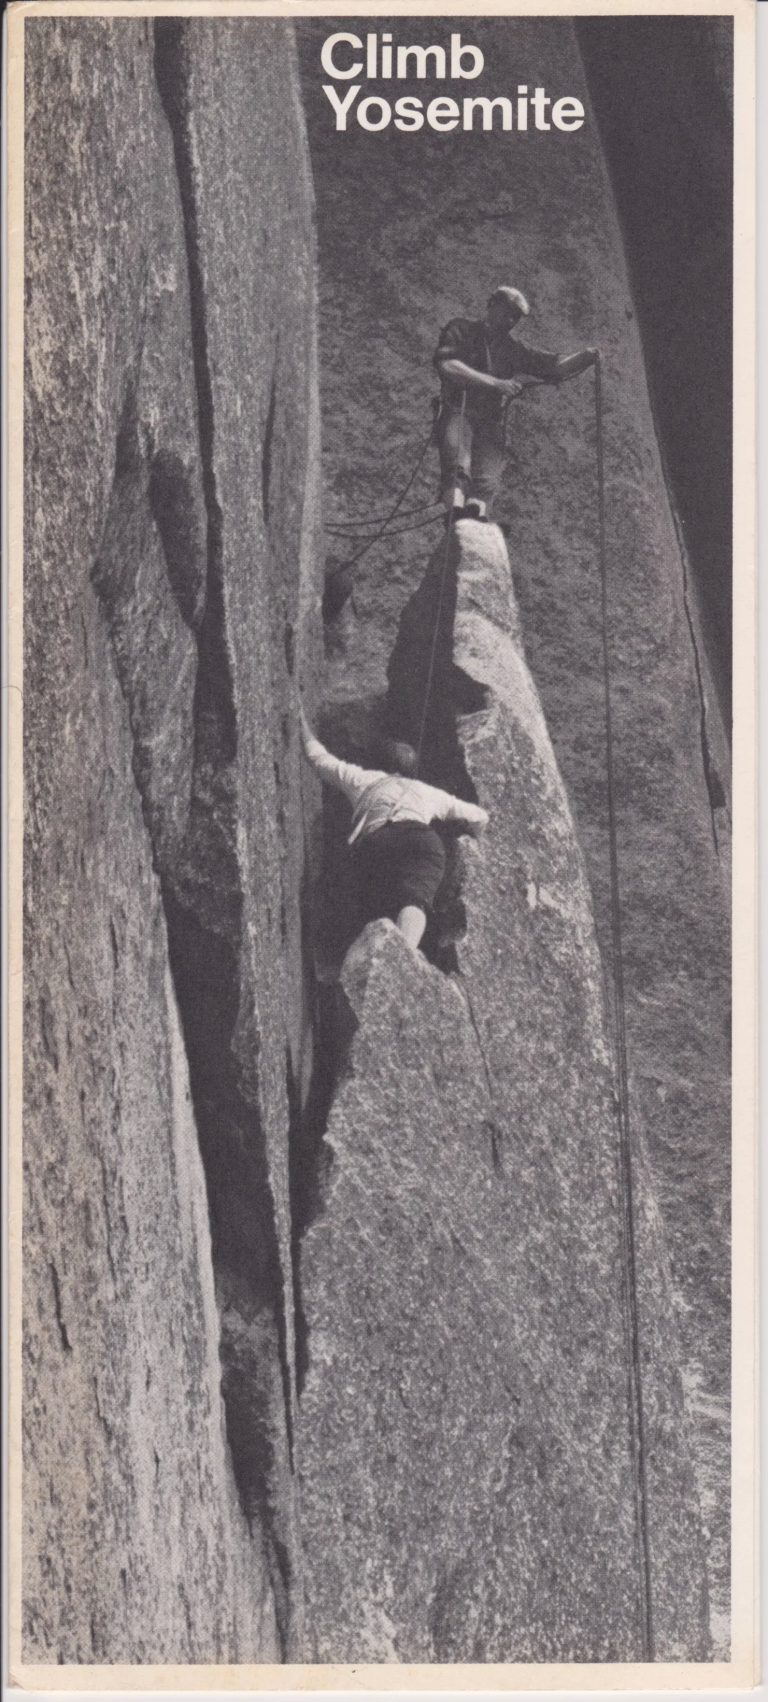 Yosemite Mountaineering School, 1969